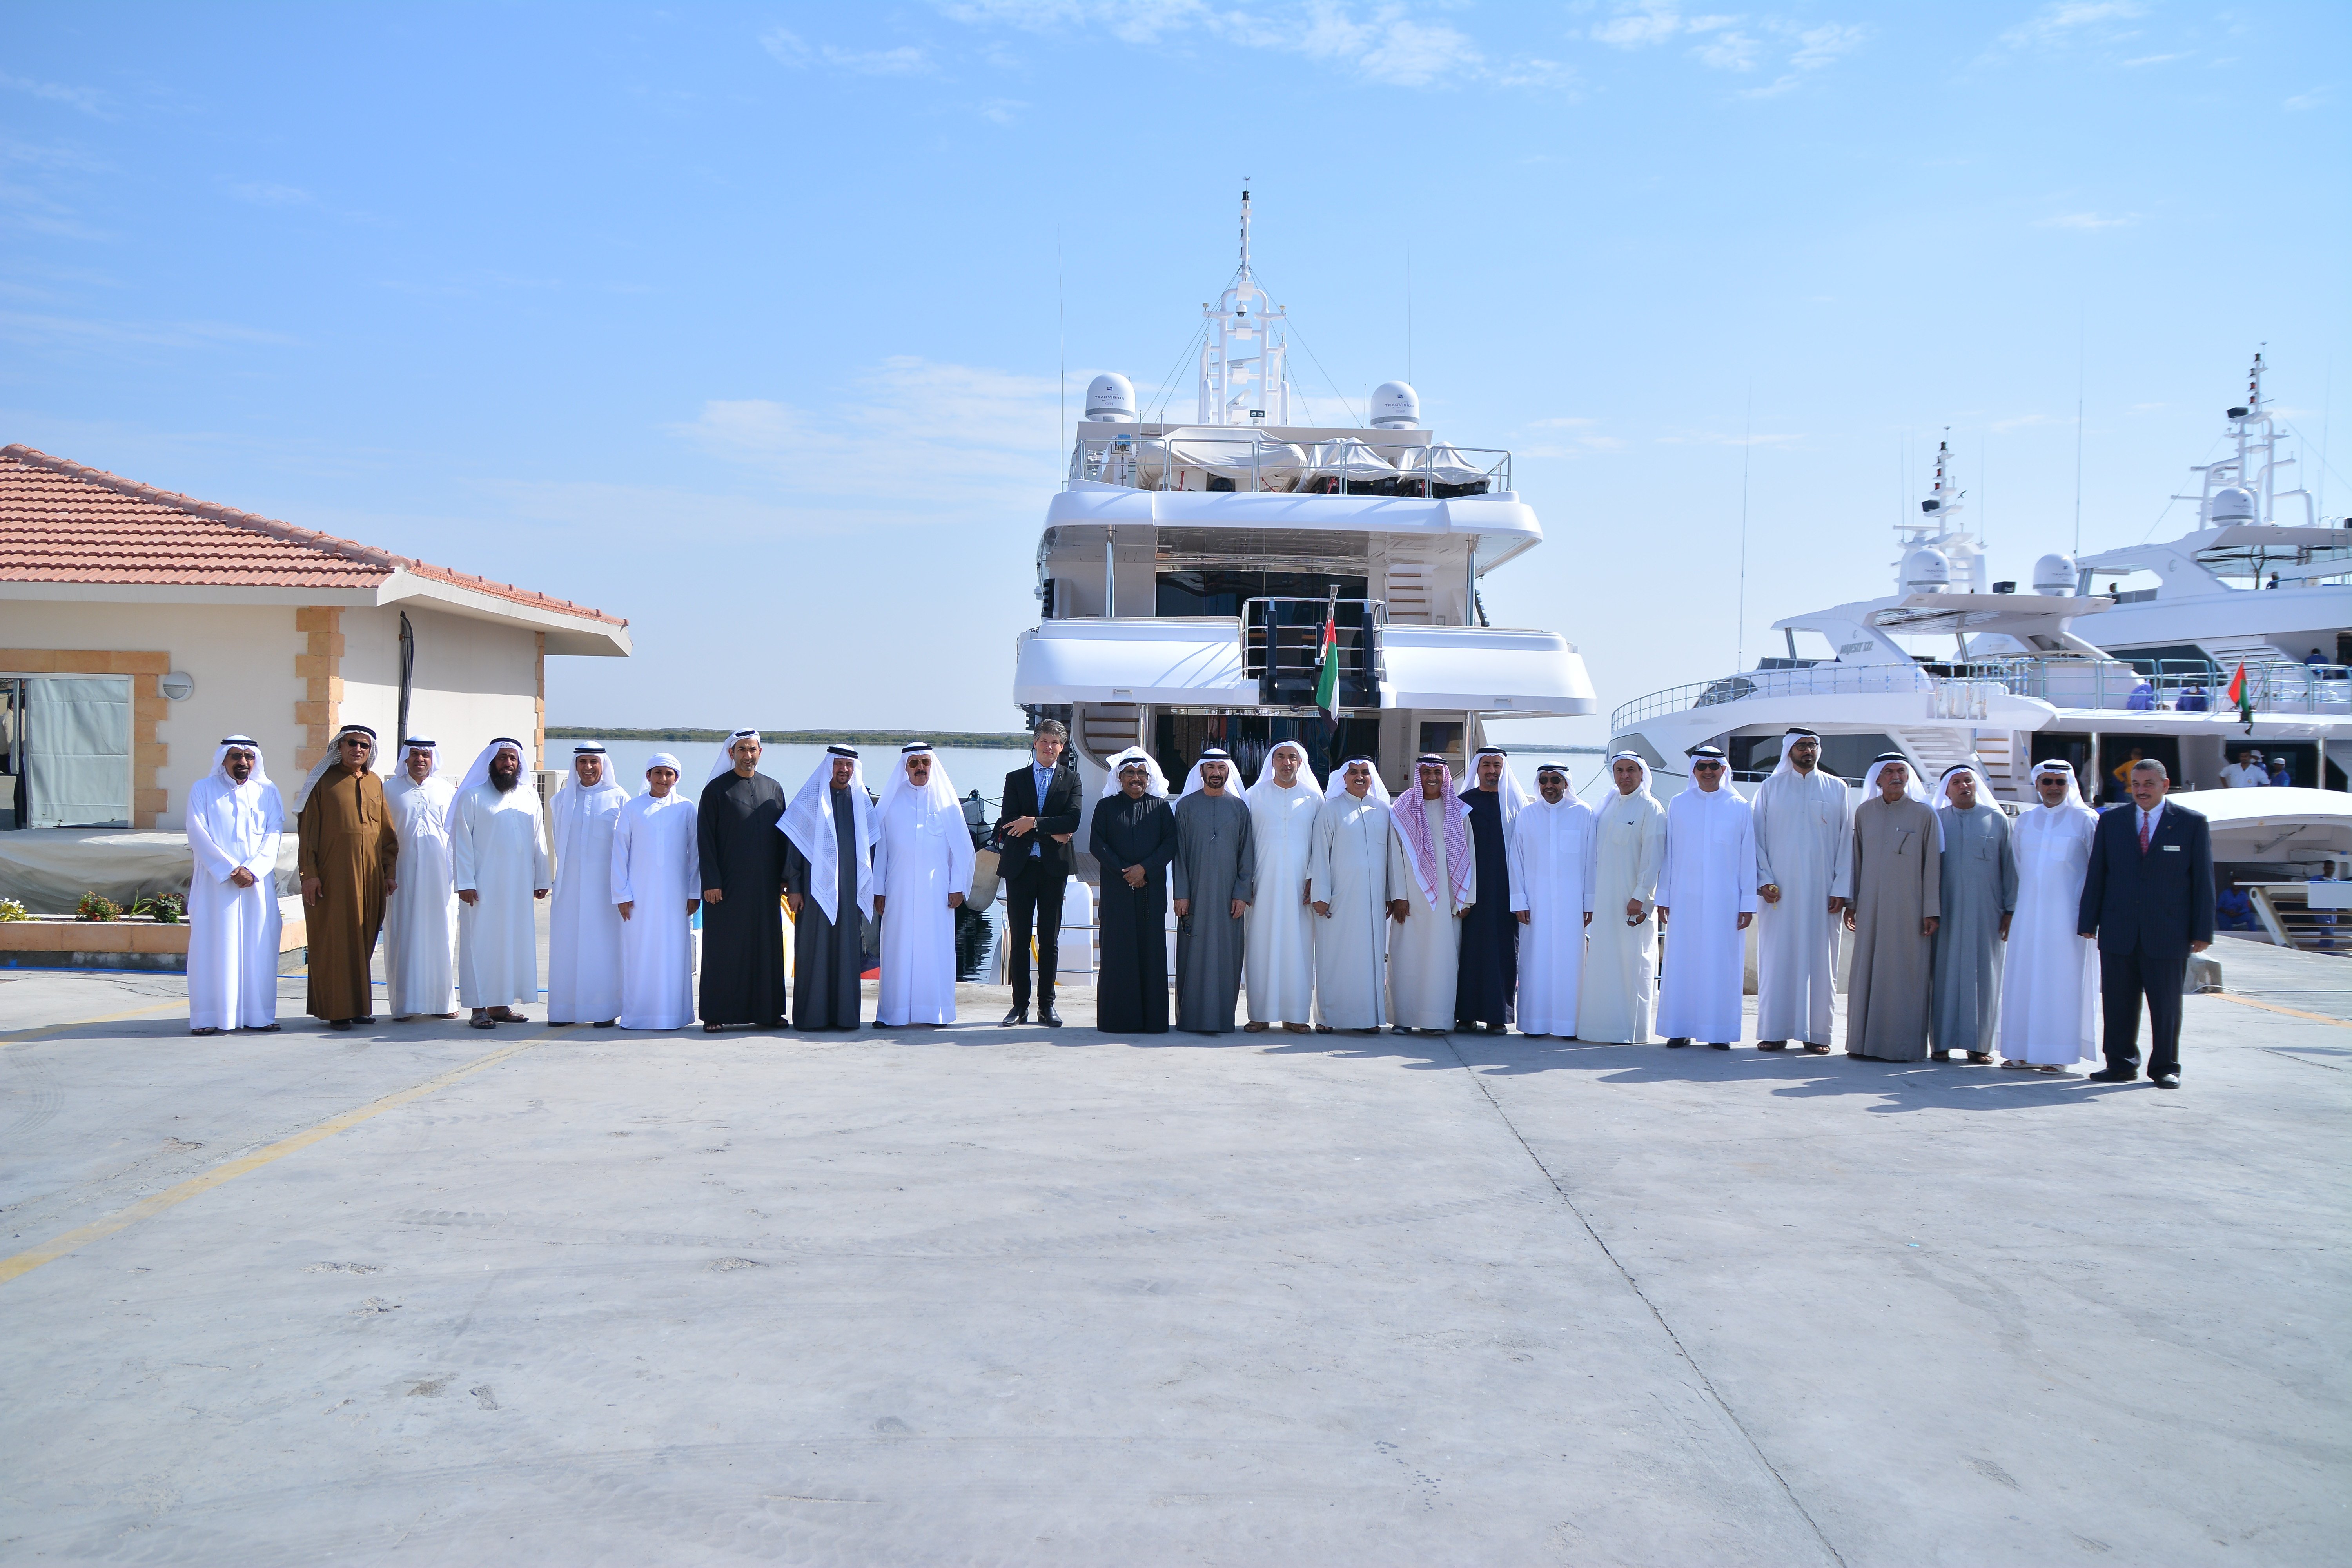 Emirati businessmen along with Mr. Mohammed Alshaali (Chairman), Mr. Erwin Bamps (CEO) and Mr. Mostafa Agib (Plant Manager) - See more at: http://blog.gulfcraftinc.com/emirati-business-delegation-tours-gulf-craft-shipyard-umm-al-quwain/#sthash.zEMjtQNK.dpuf